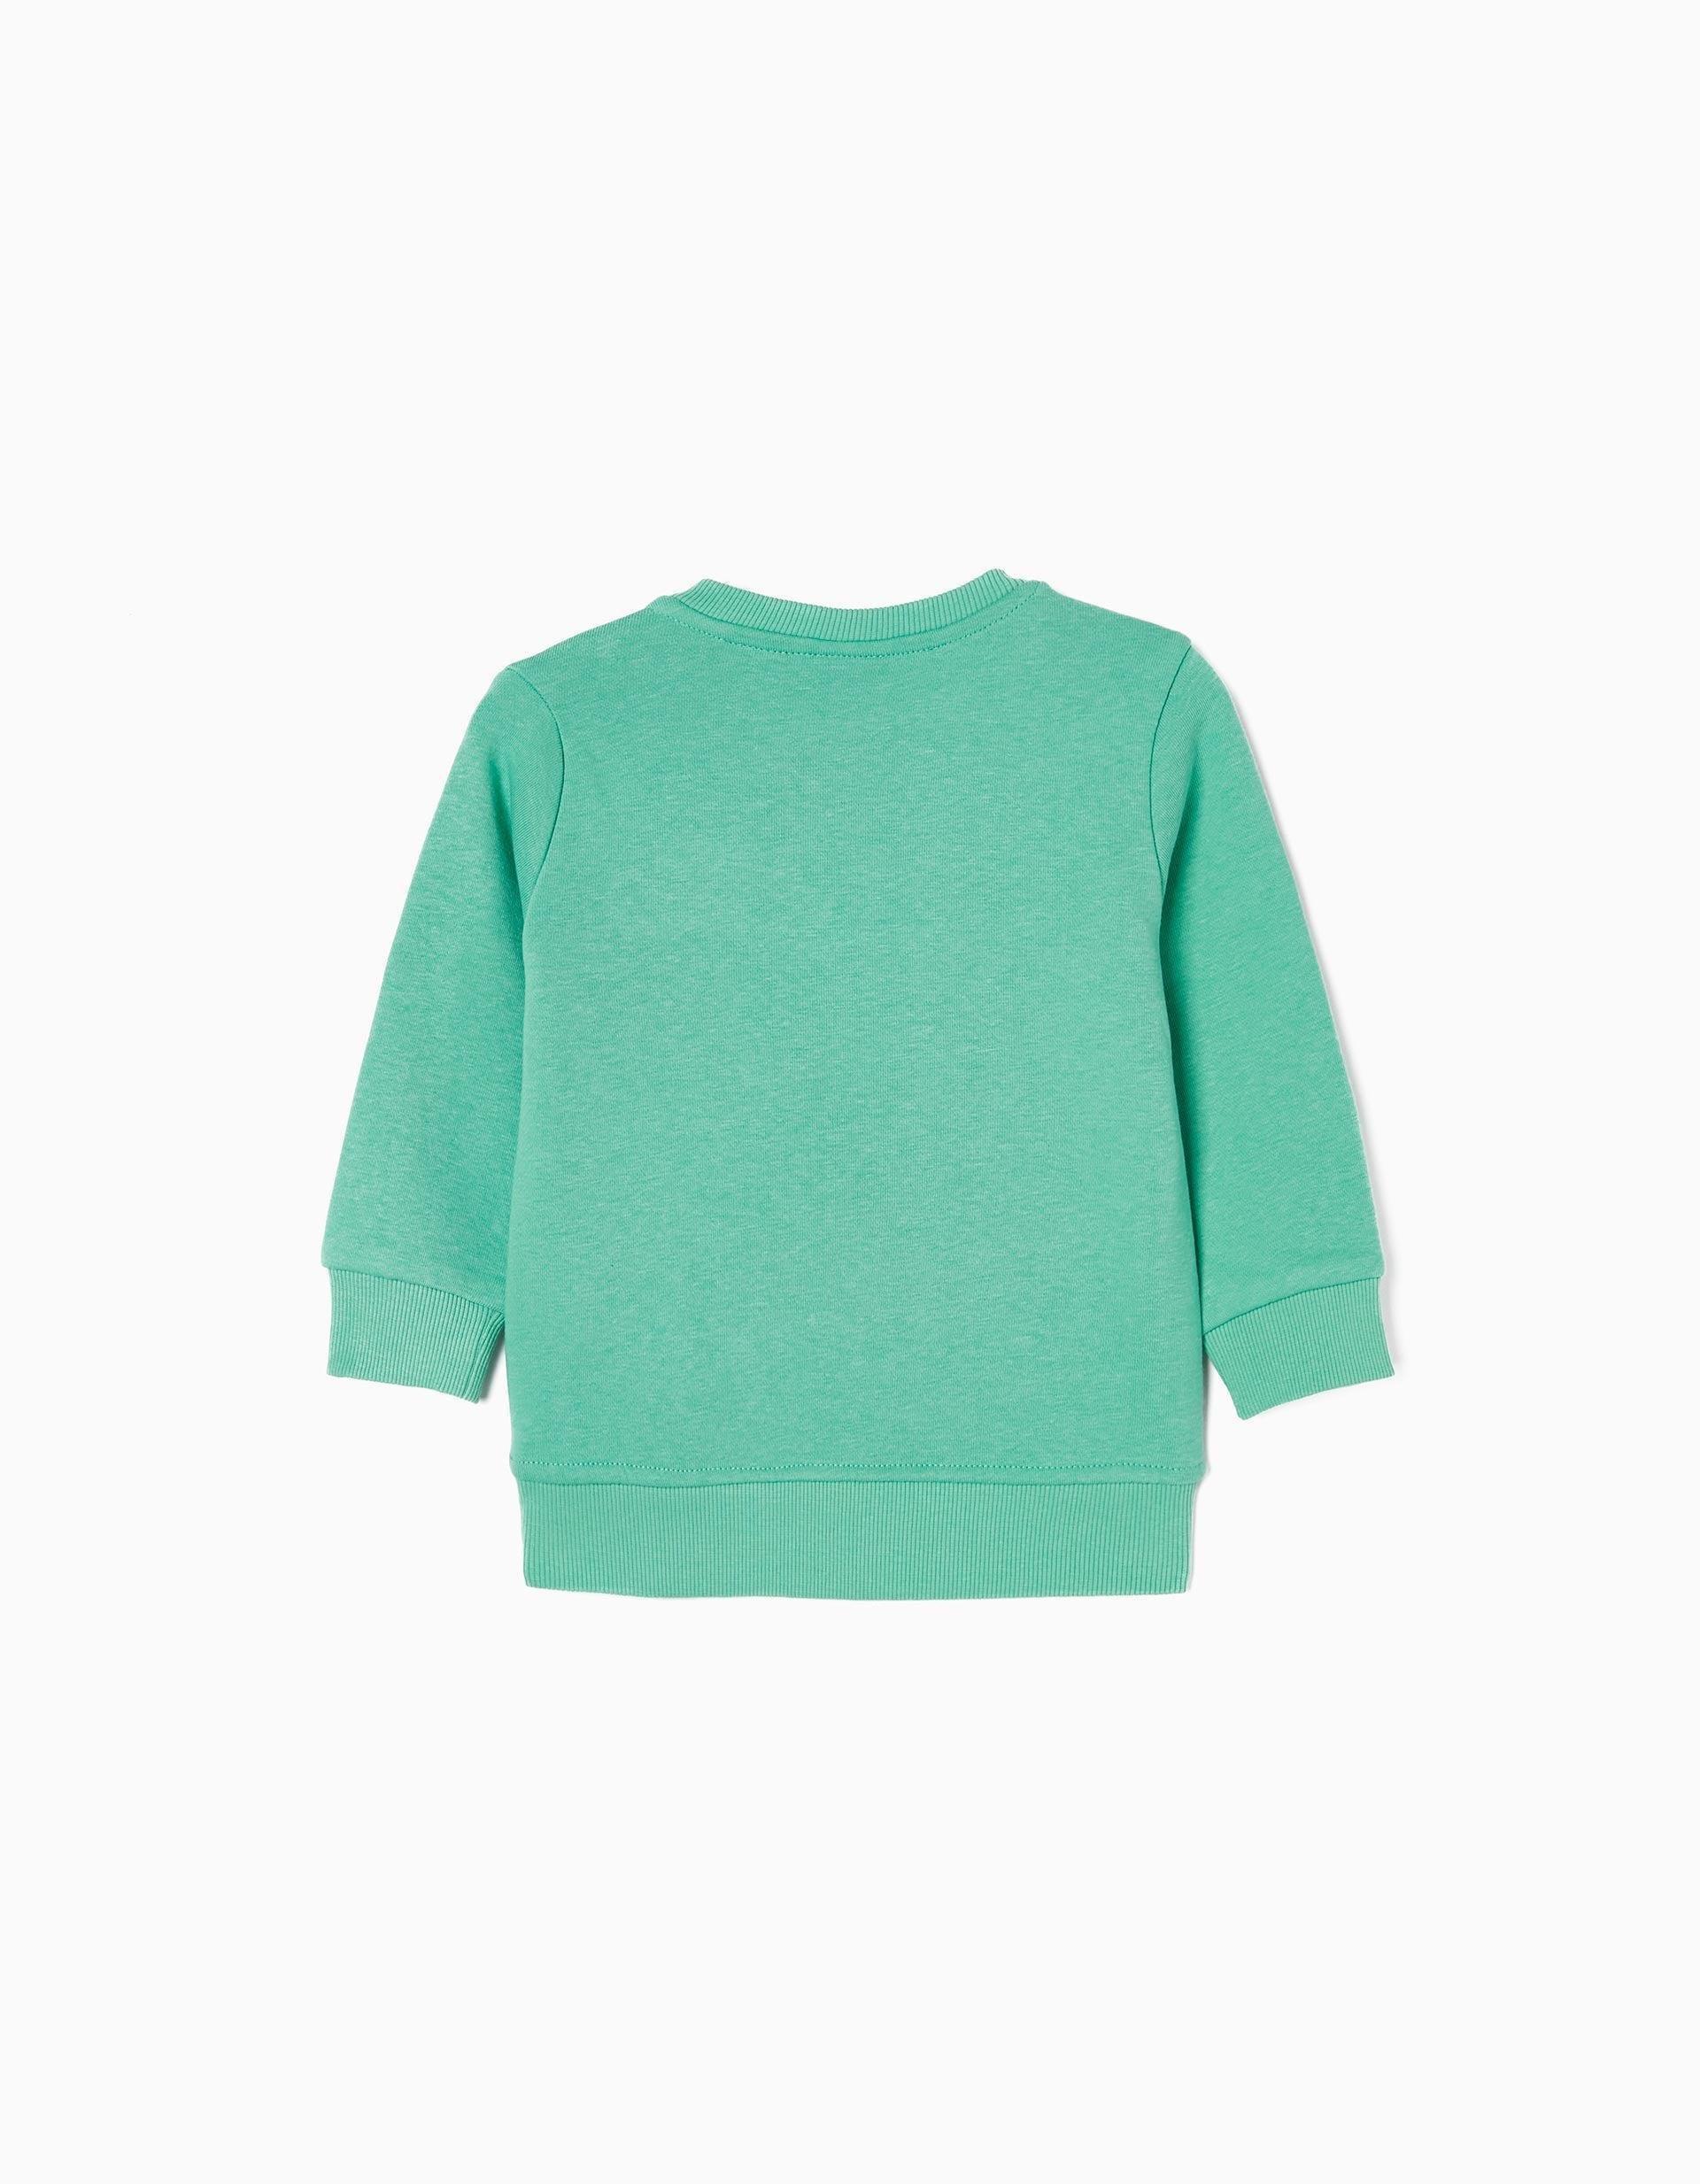 Zippy - Green Cotton Sweatshirt, Baby Boys